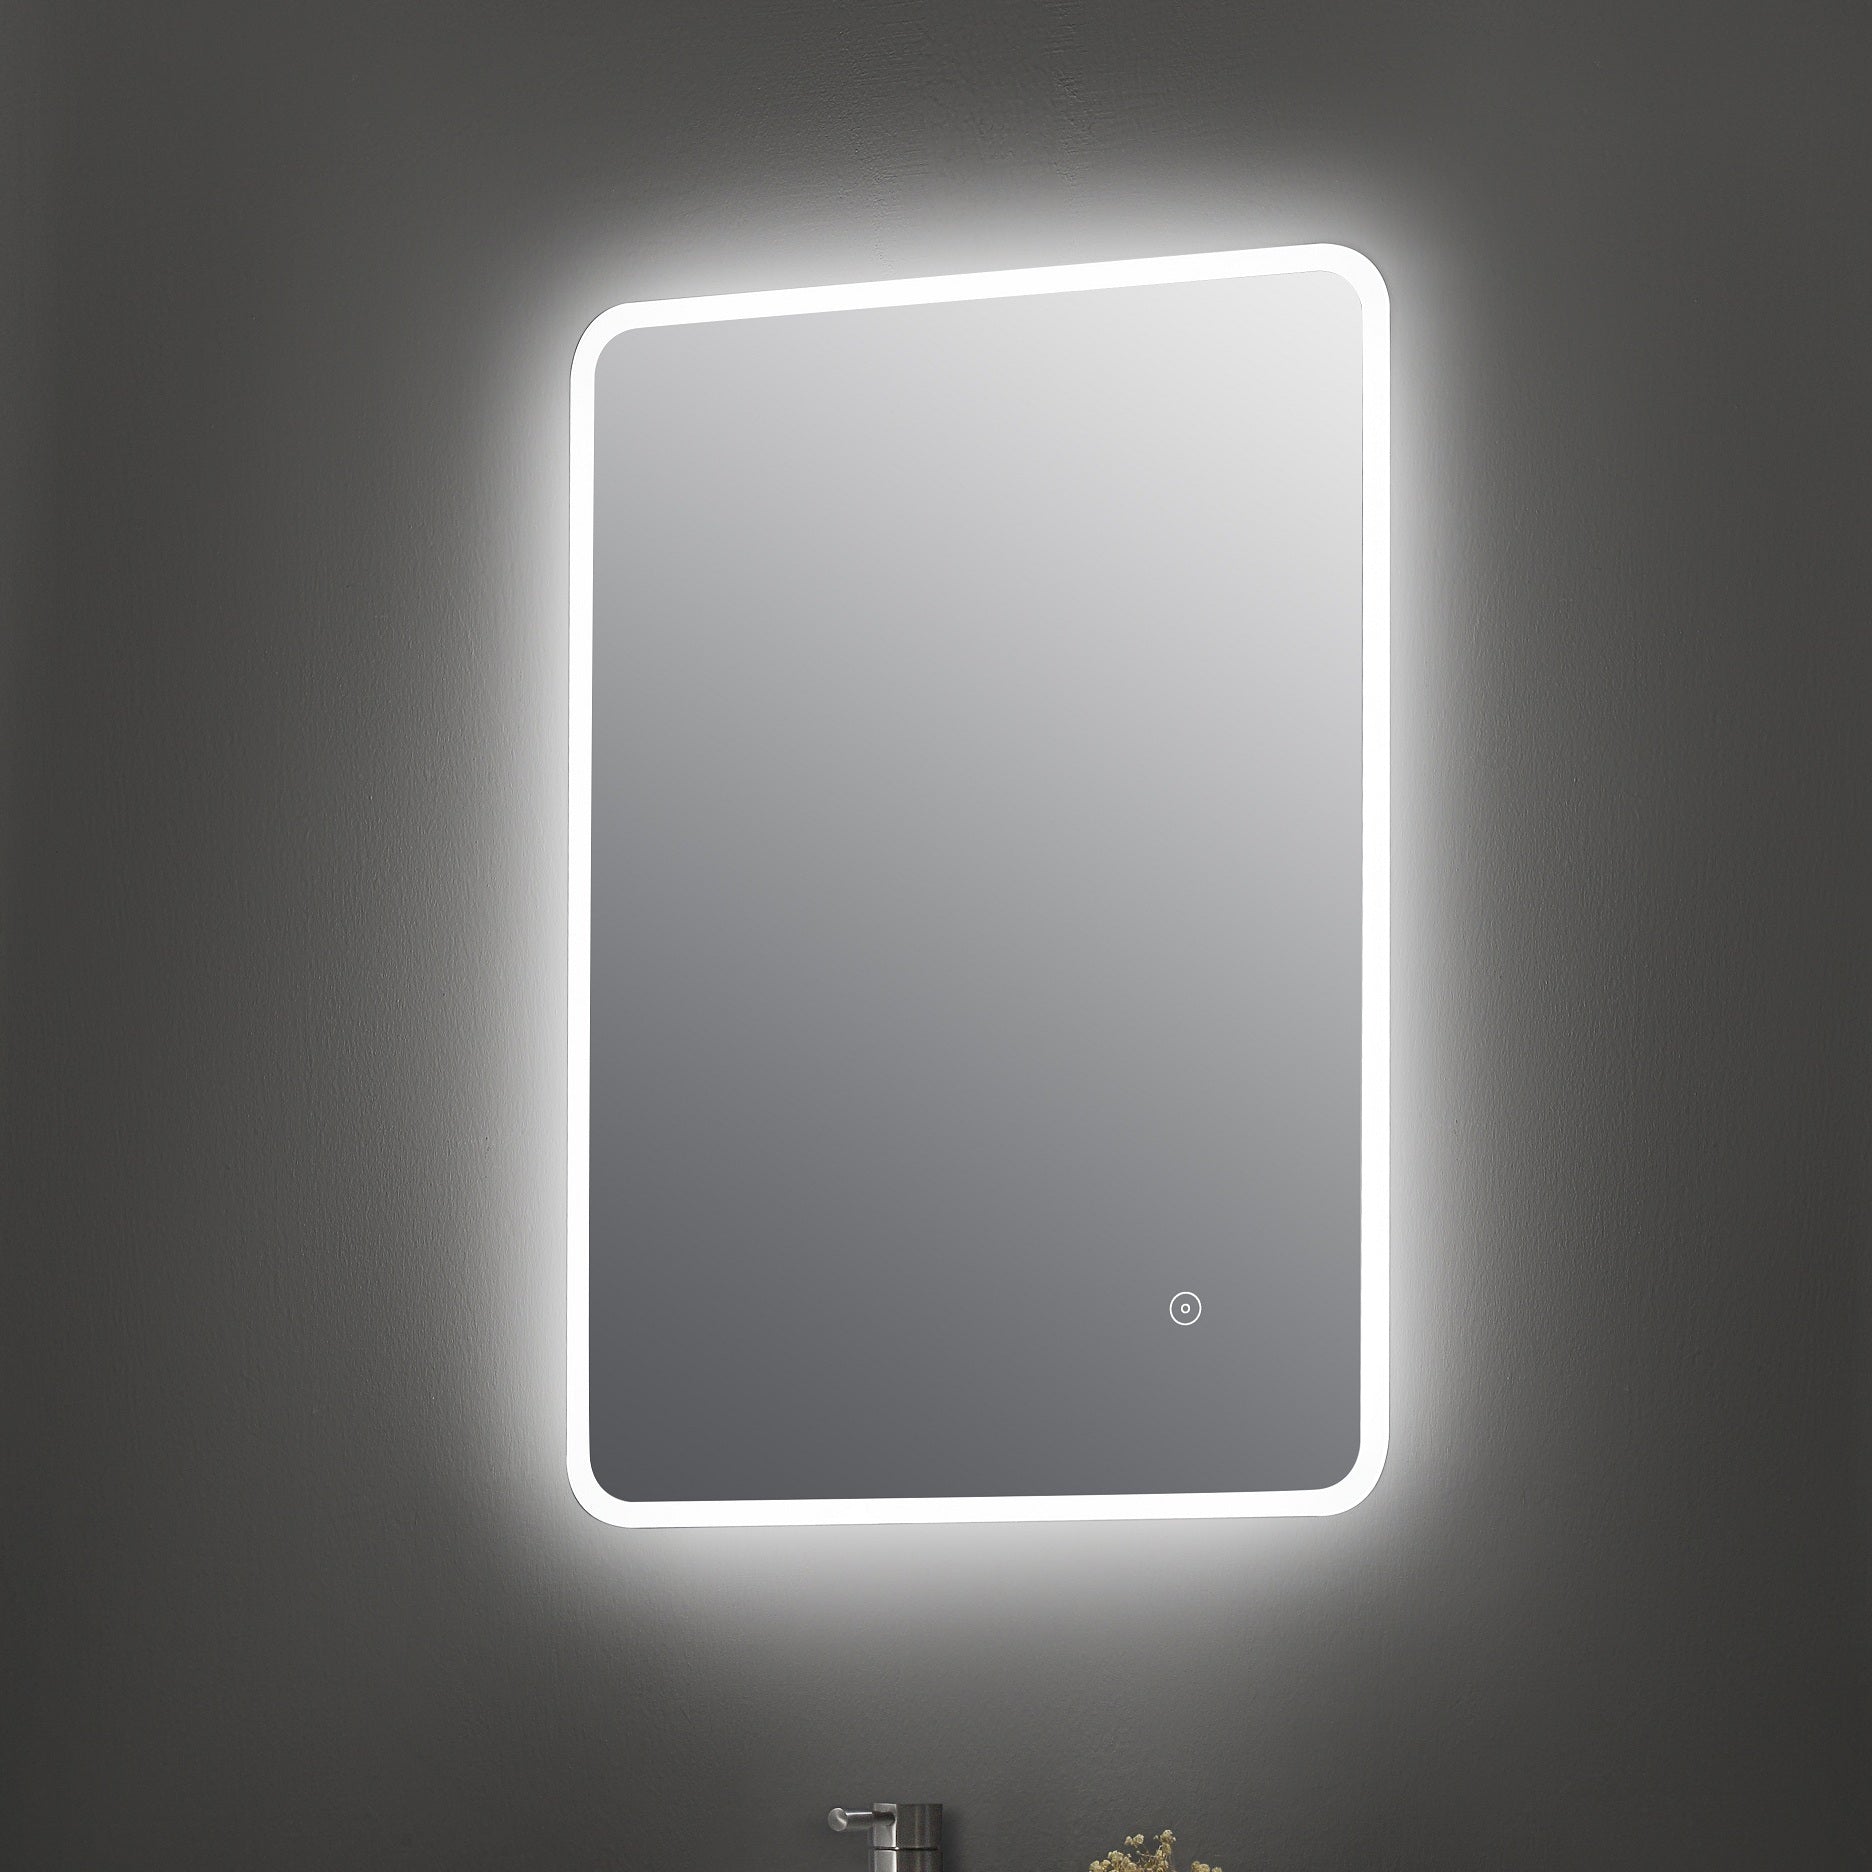 Illuminated bathroom mirror on dark wall with chrome tap